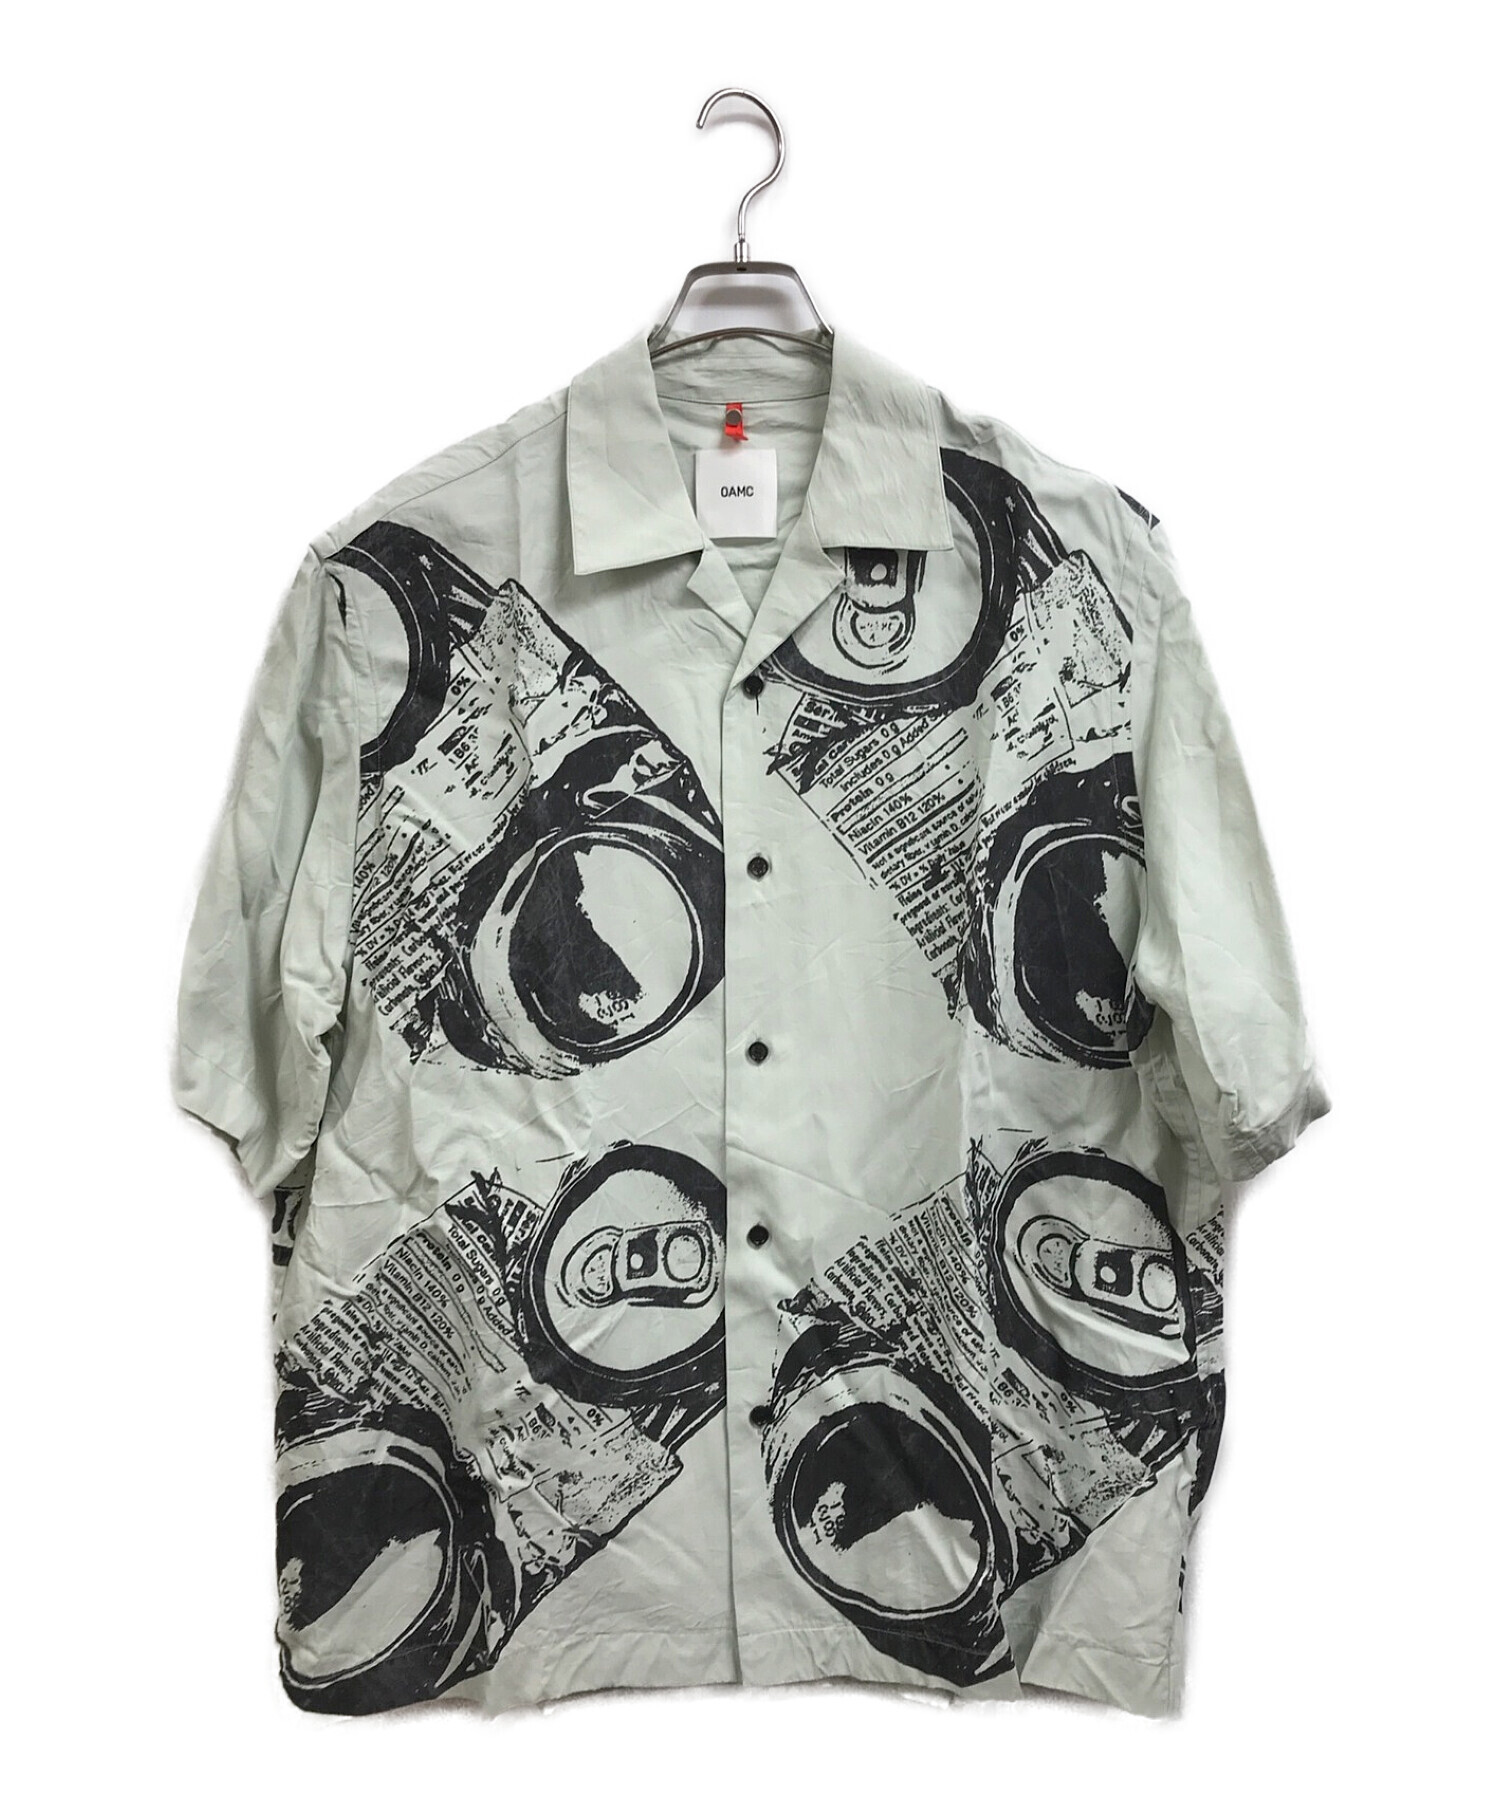 13,650円oamc 22ss kurt shirt